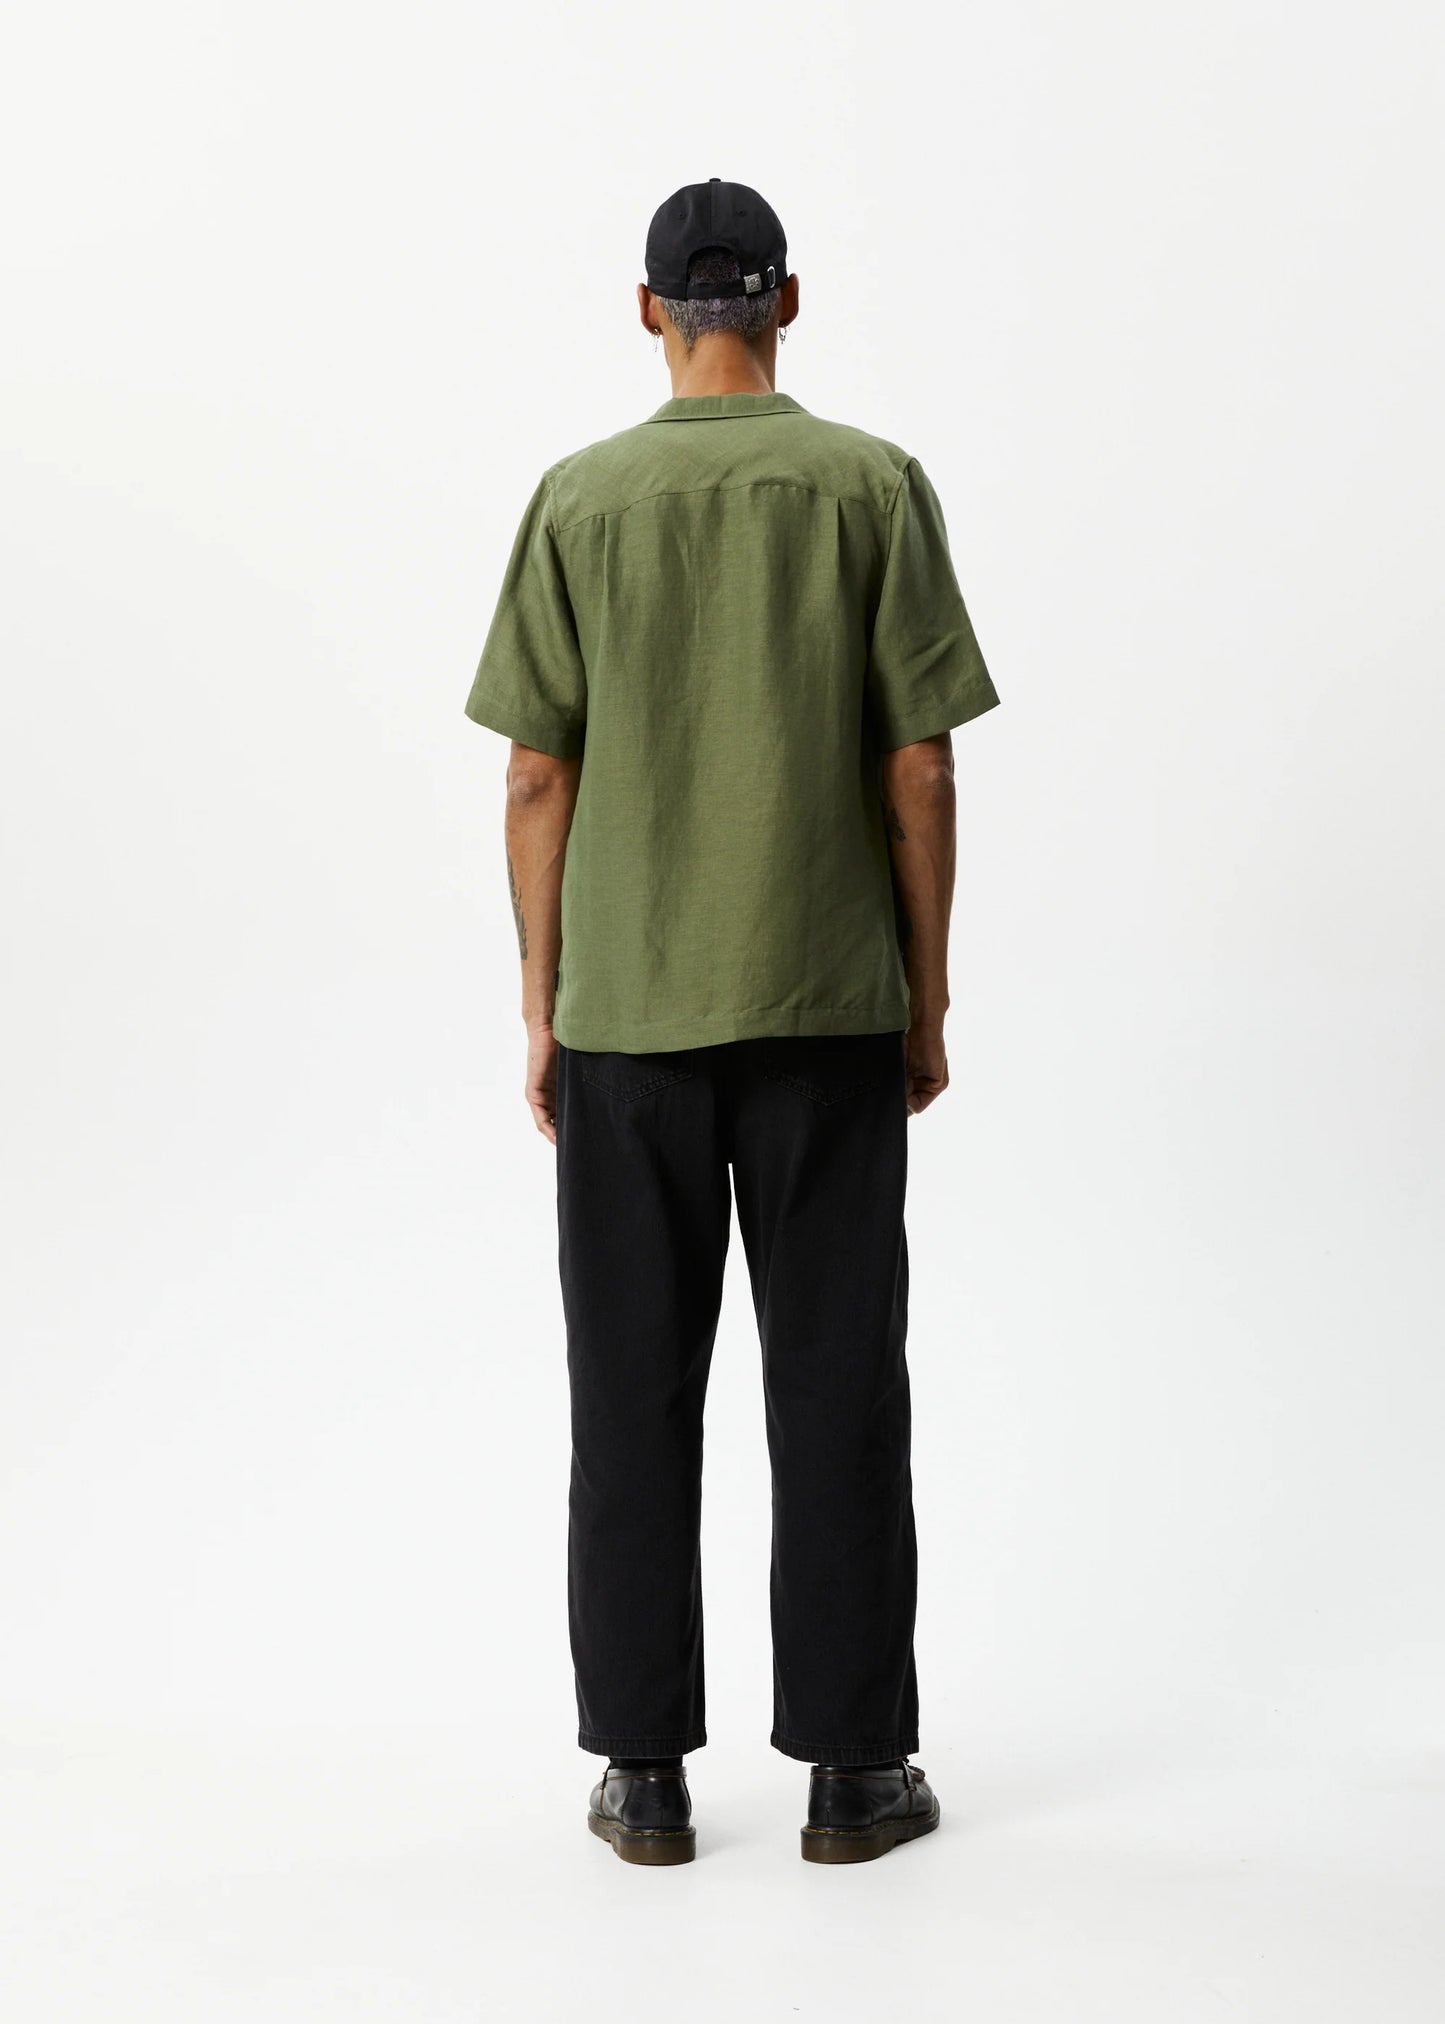 Daily - Hemp Cuban Short Sleeve Shirt - Military